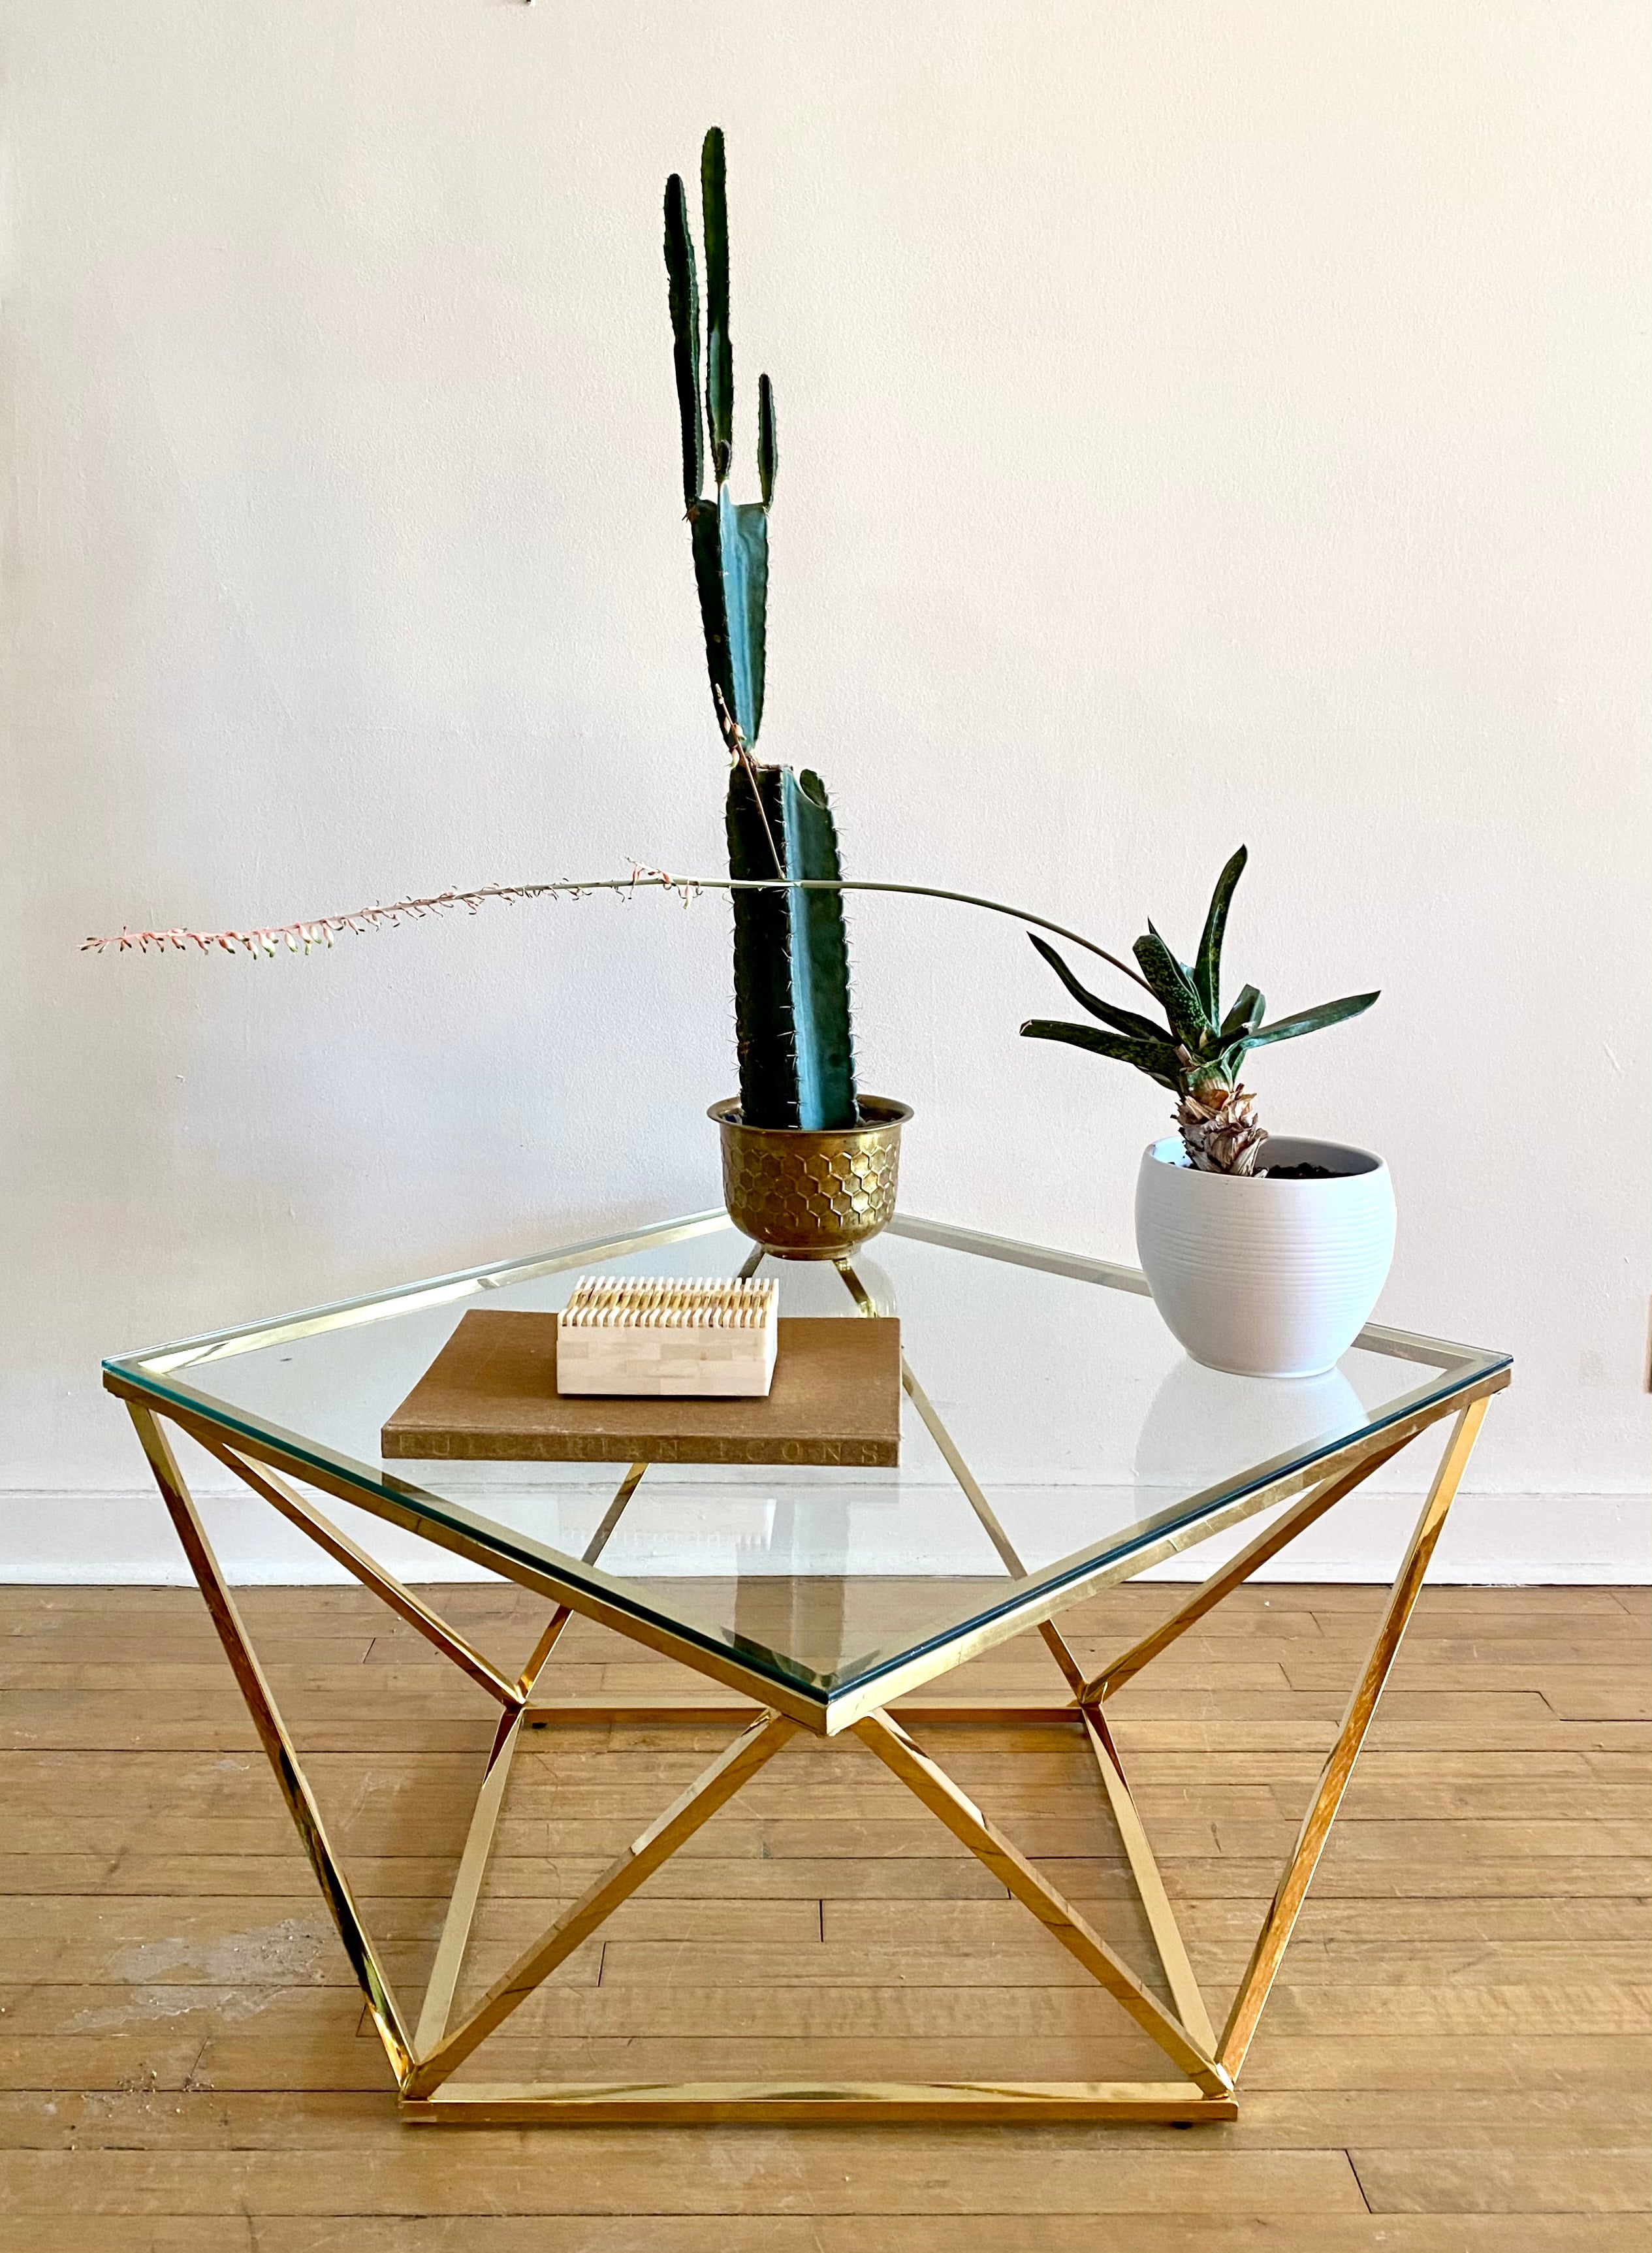 Geometric Brass Coffee Table